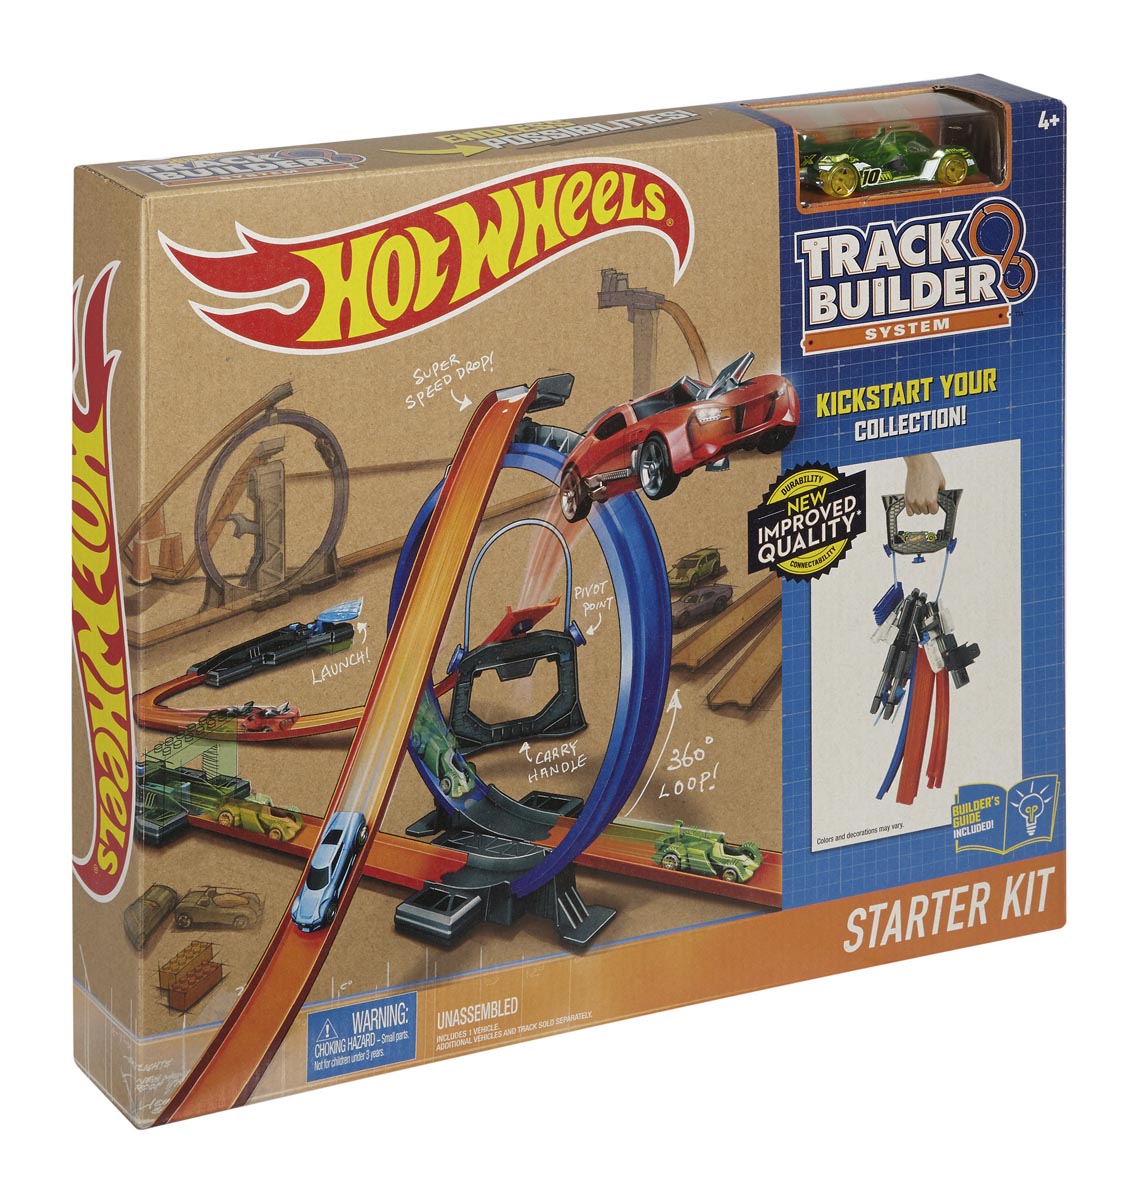 Tracks builder. Hdx79 hot Wheels. Хот Вилс track Builder Starters Kit. Hot Wheels track Builder инструкция. Игровой набор hot Wheels track Builder dww95.